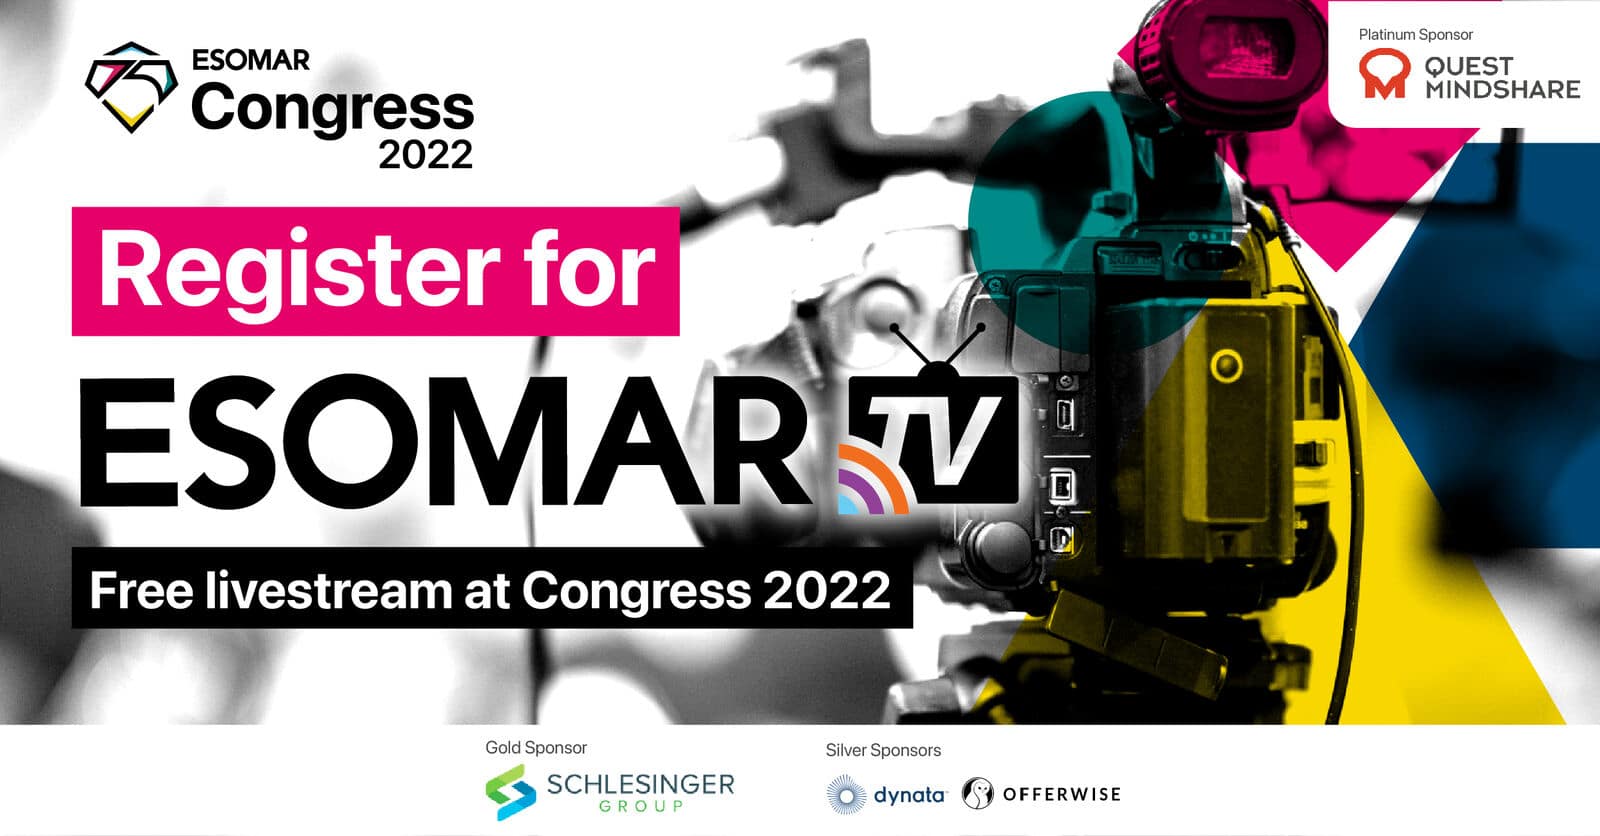 register for esomar tv free livestream at congress 2022.